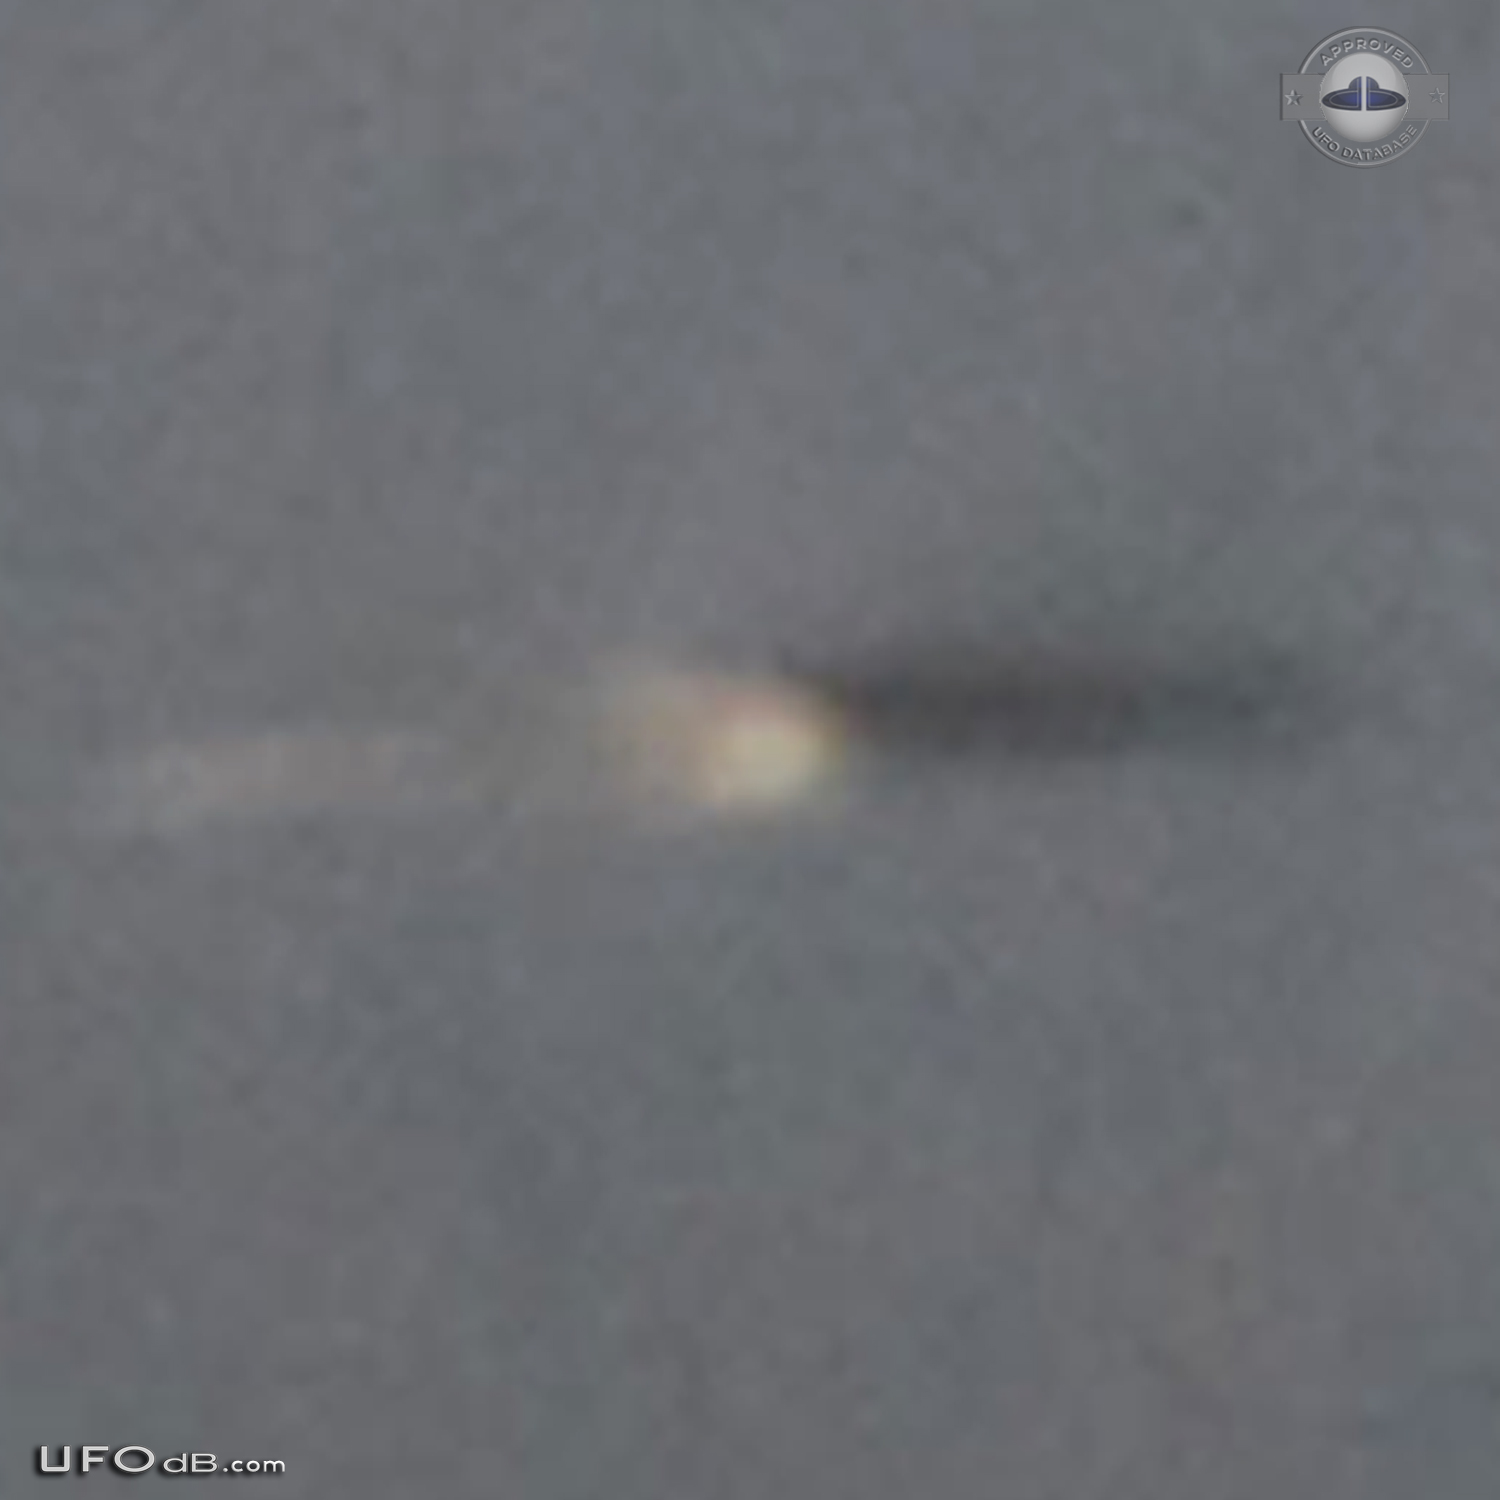 Cattle farm picture reveals passing saucer UFO in Portugesa, Venezuela UFO Picture #484-4